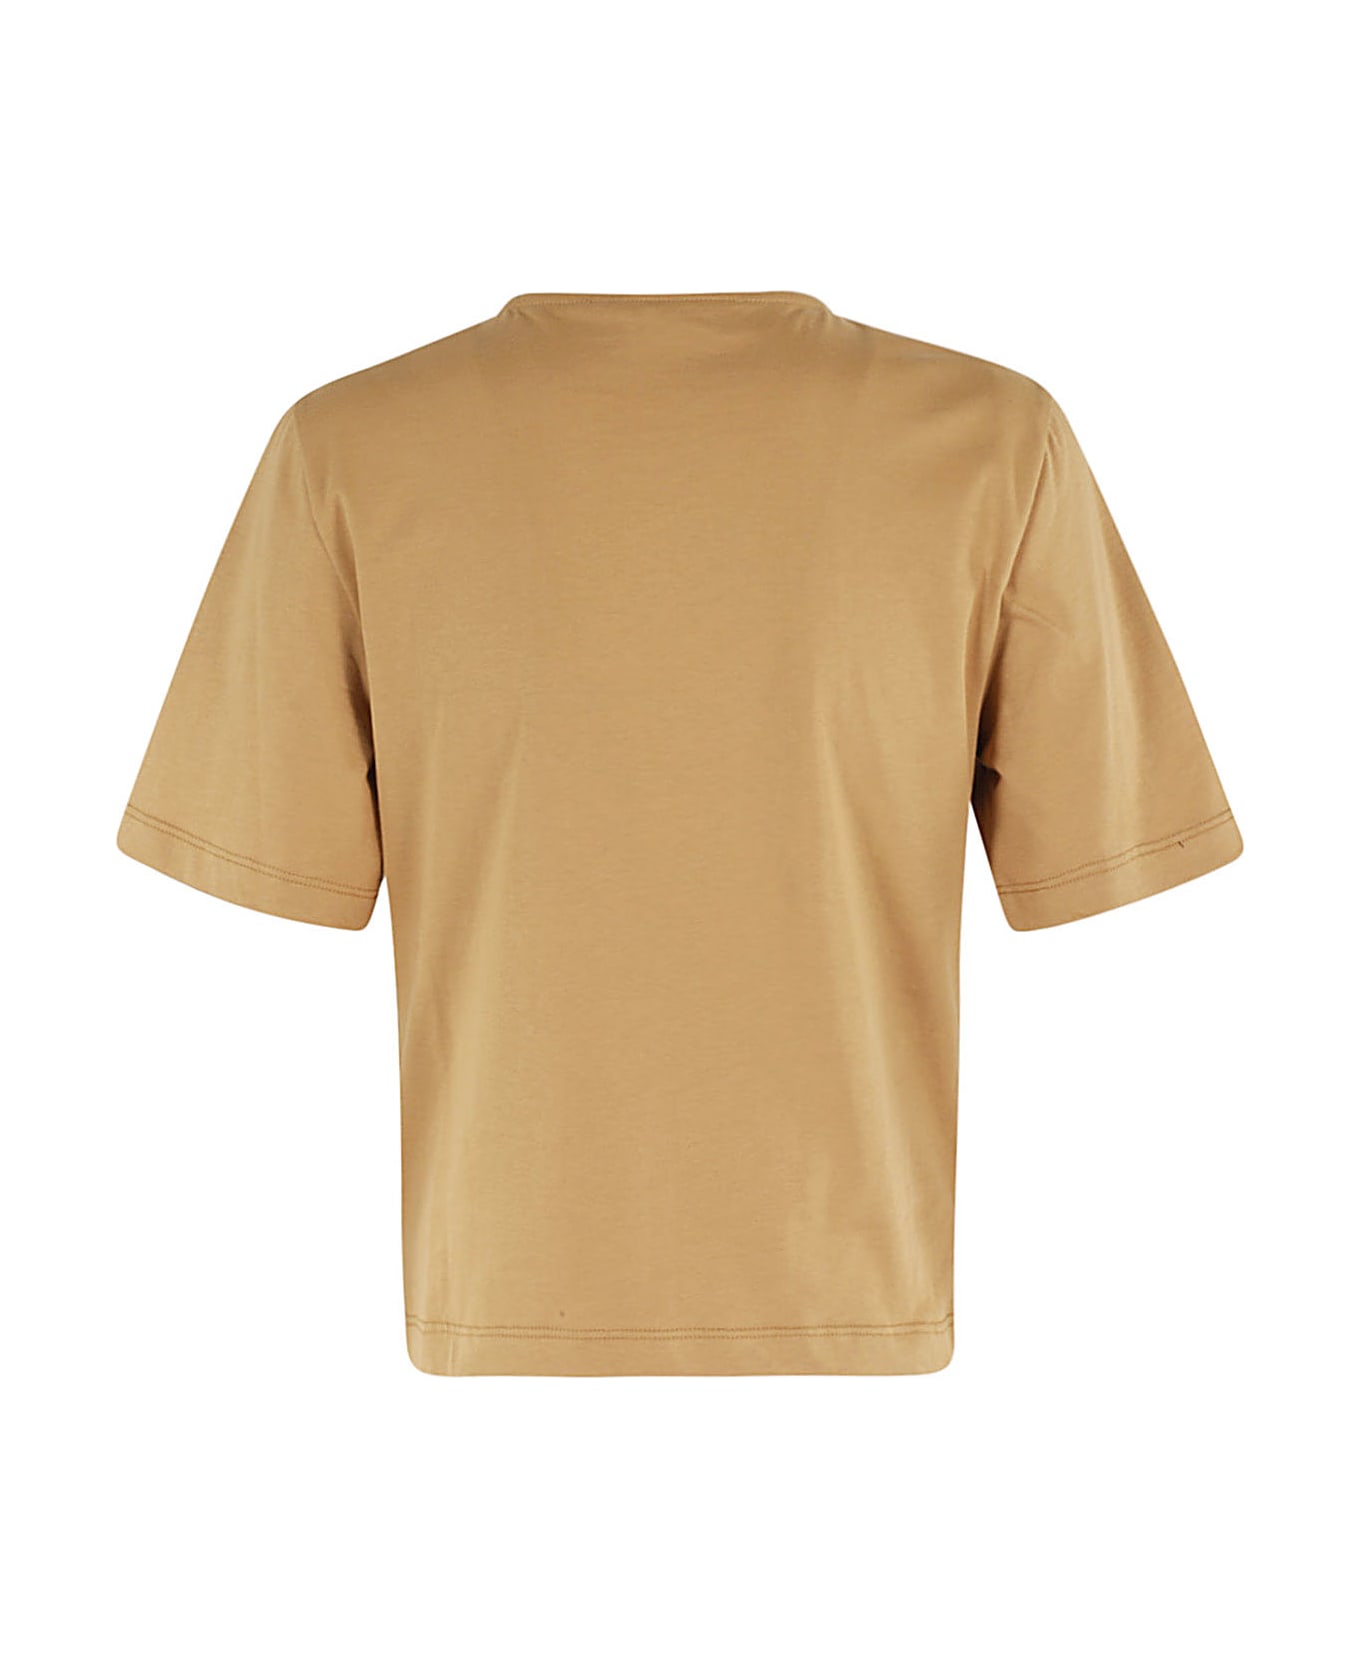 Federica Tosi T Shirt - Deserto